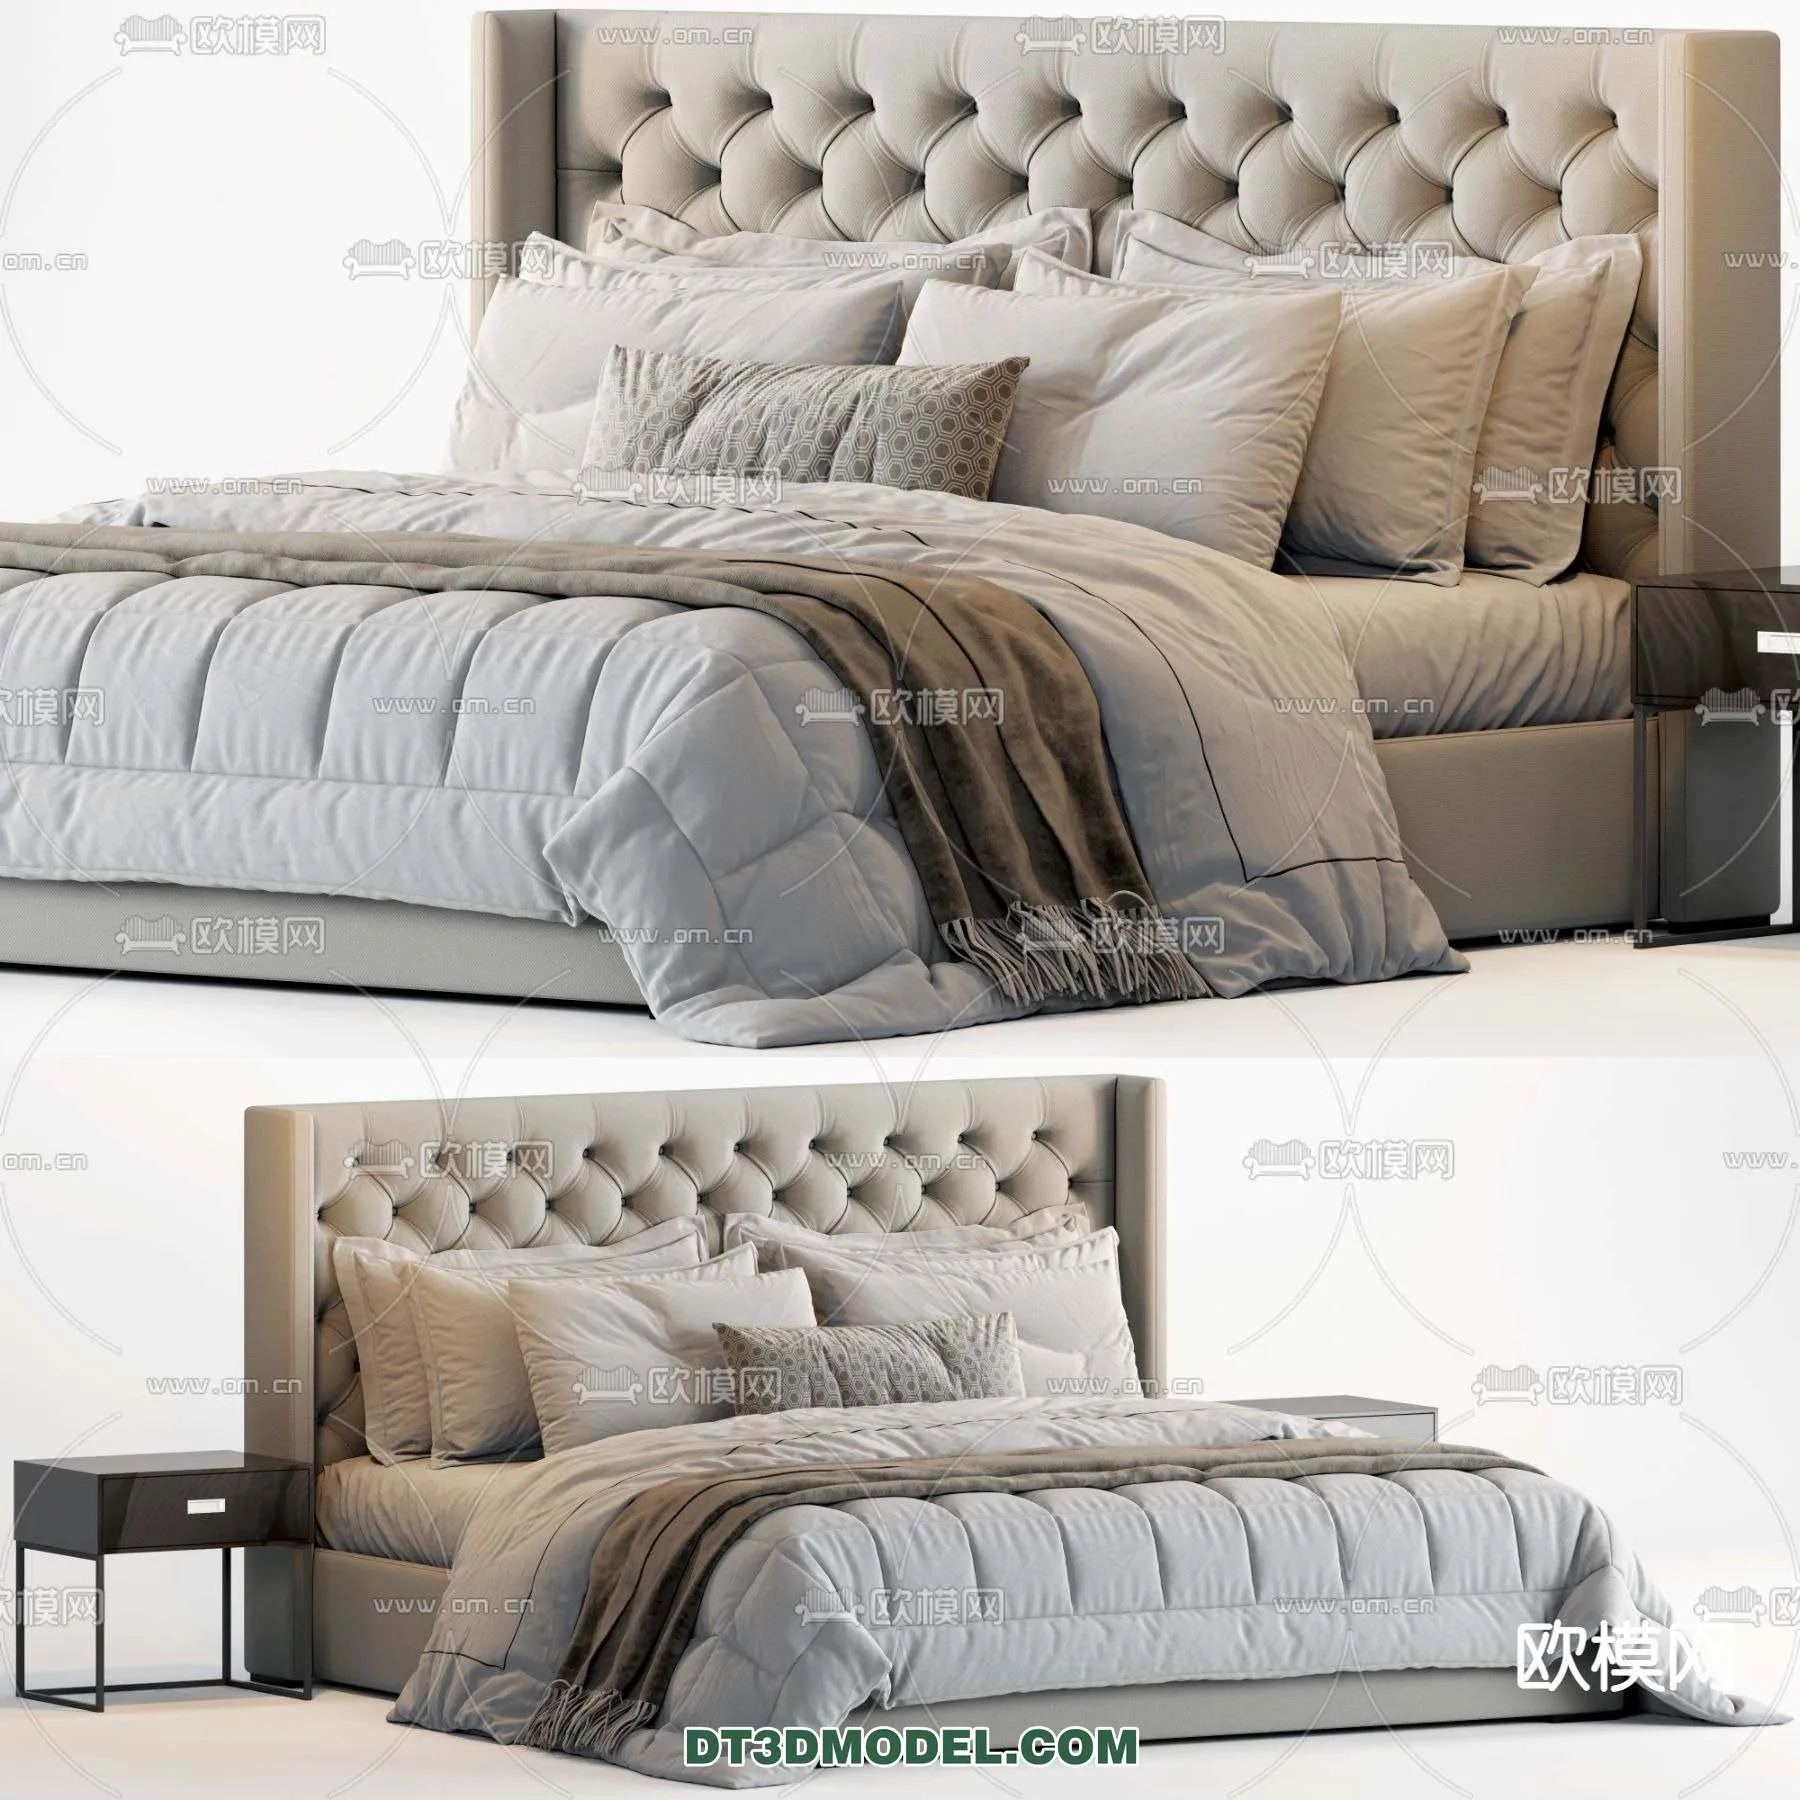 Double Bed 3D Models – 0022